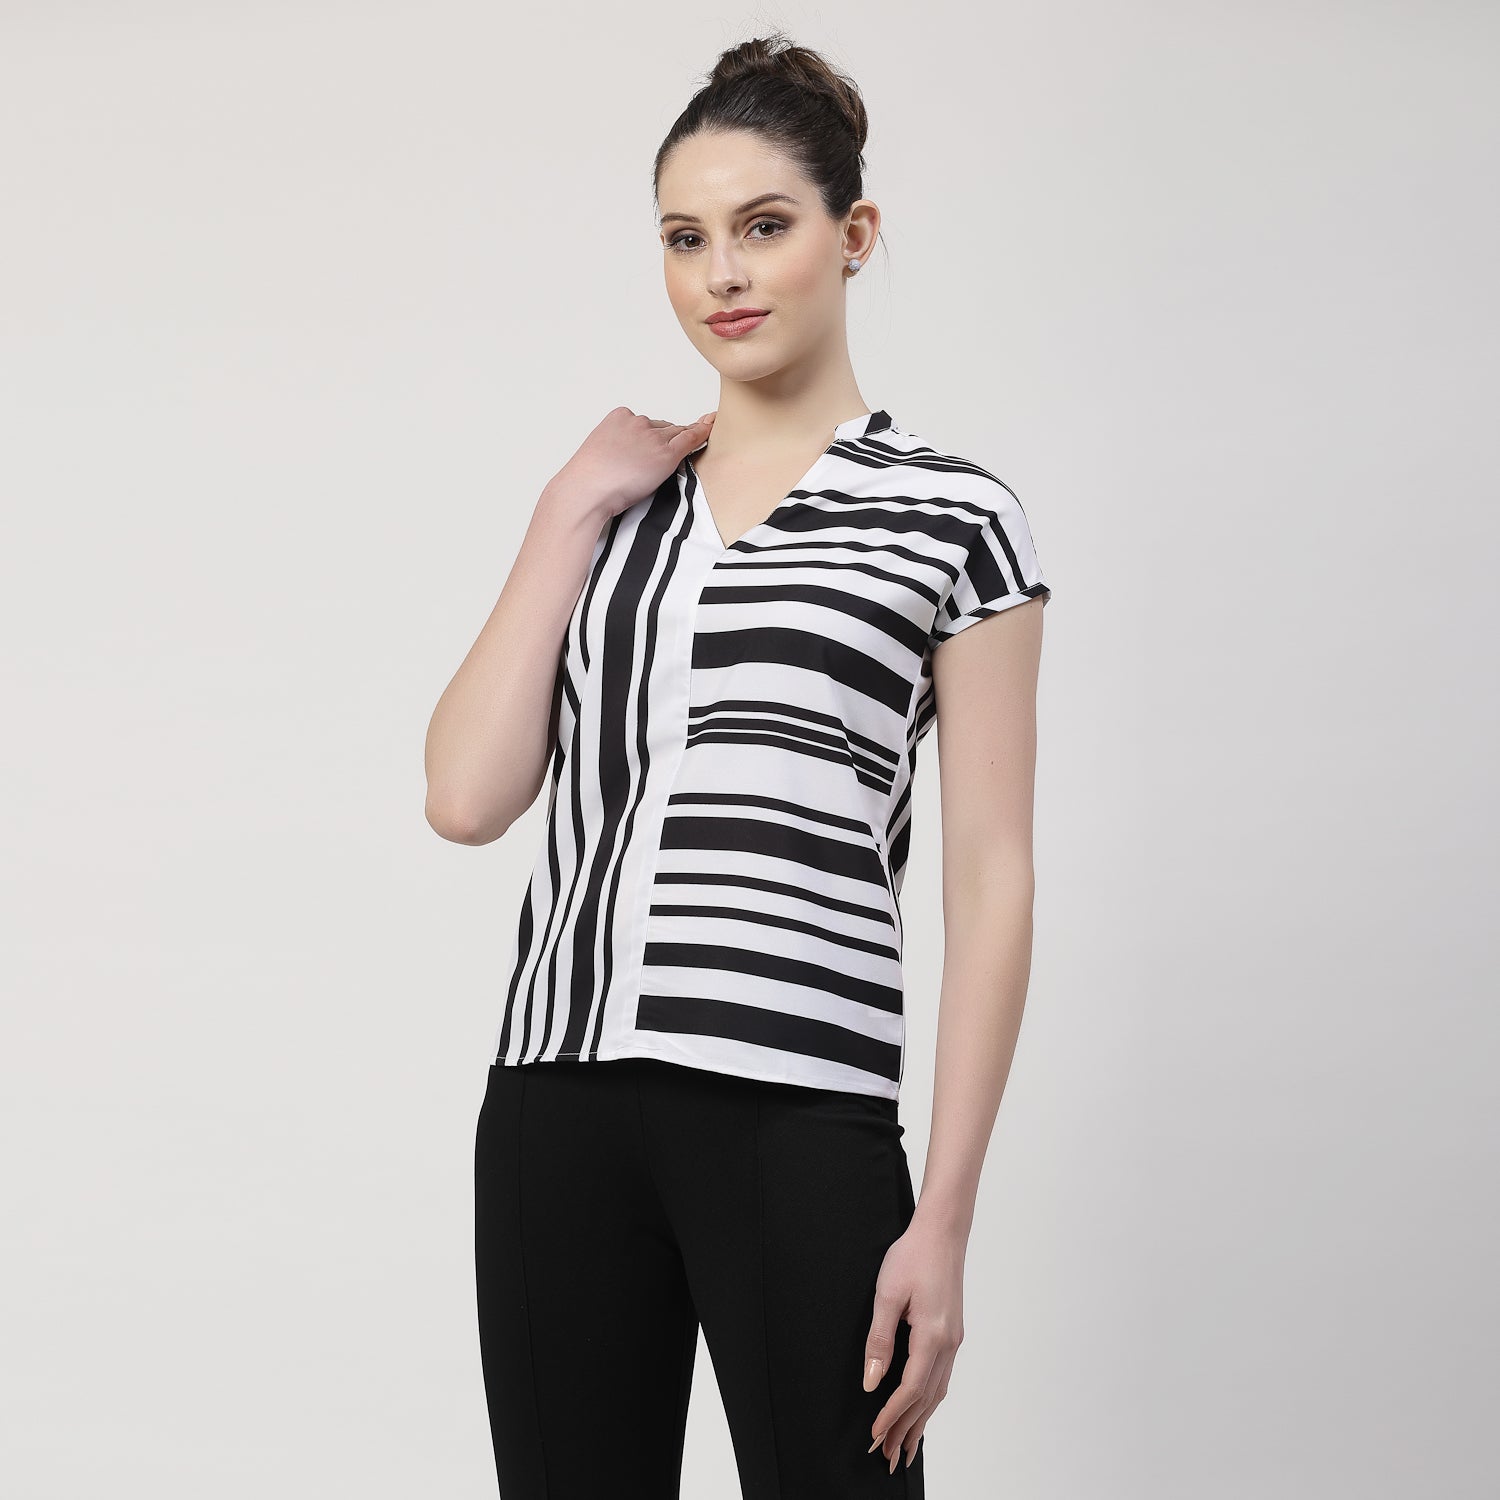 Black & White Stripes Top